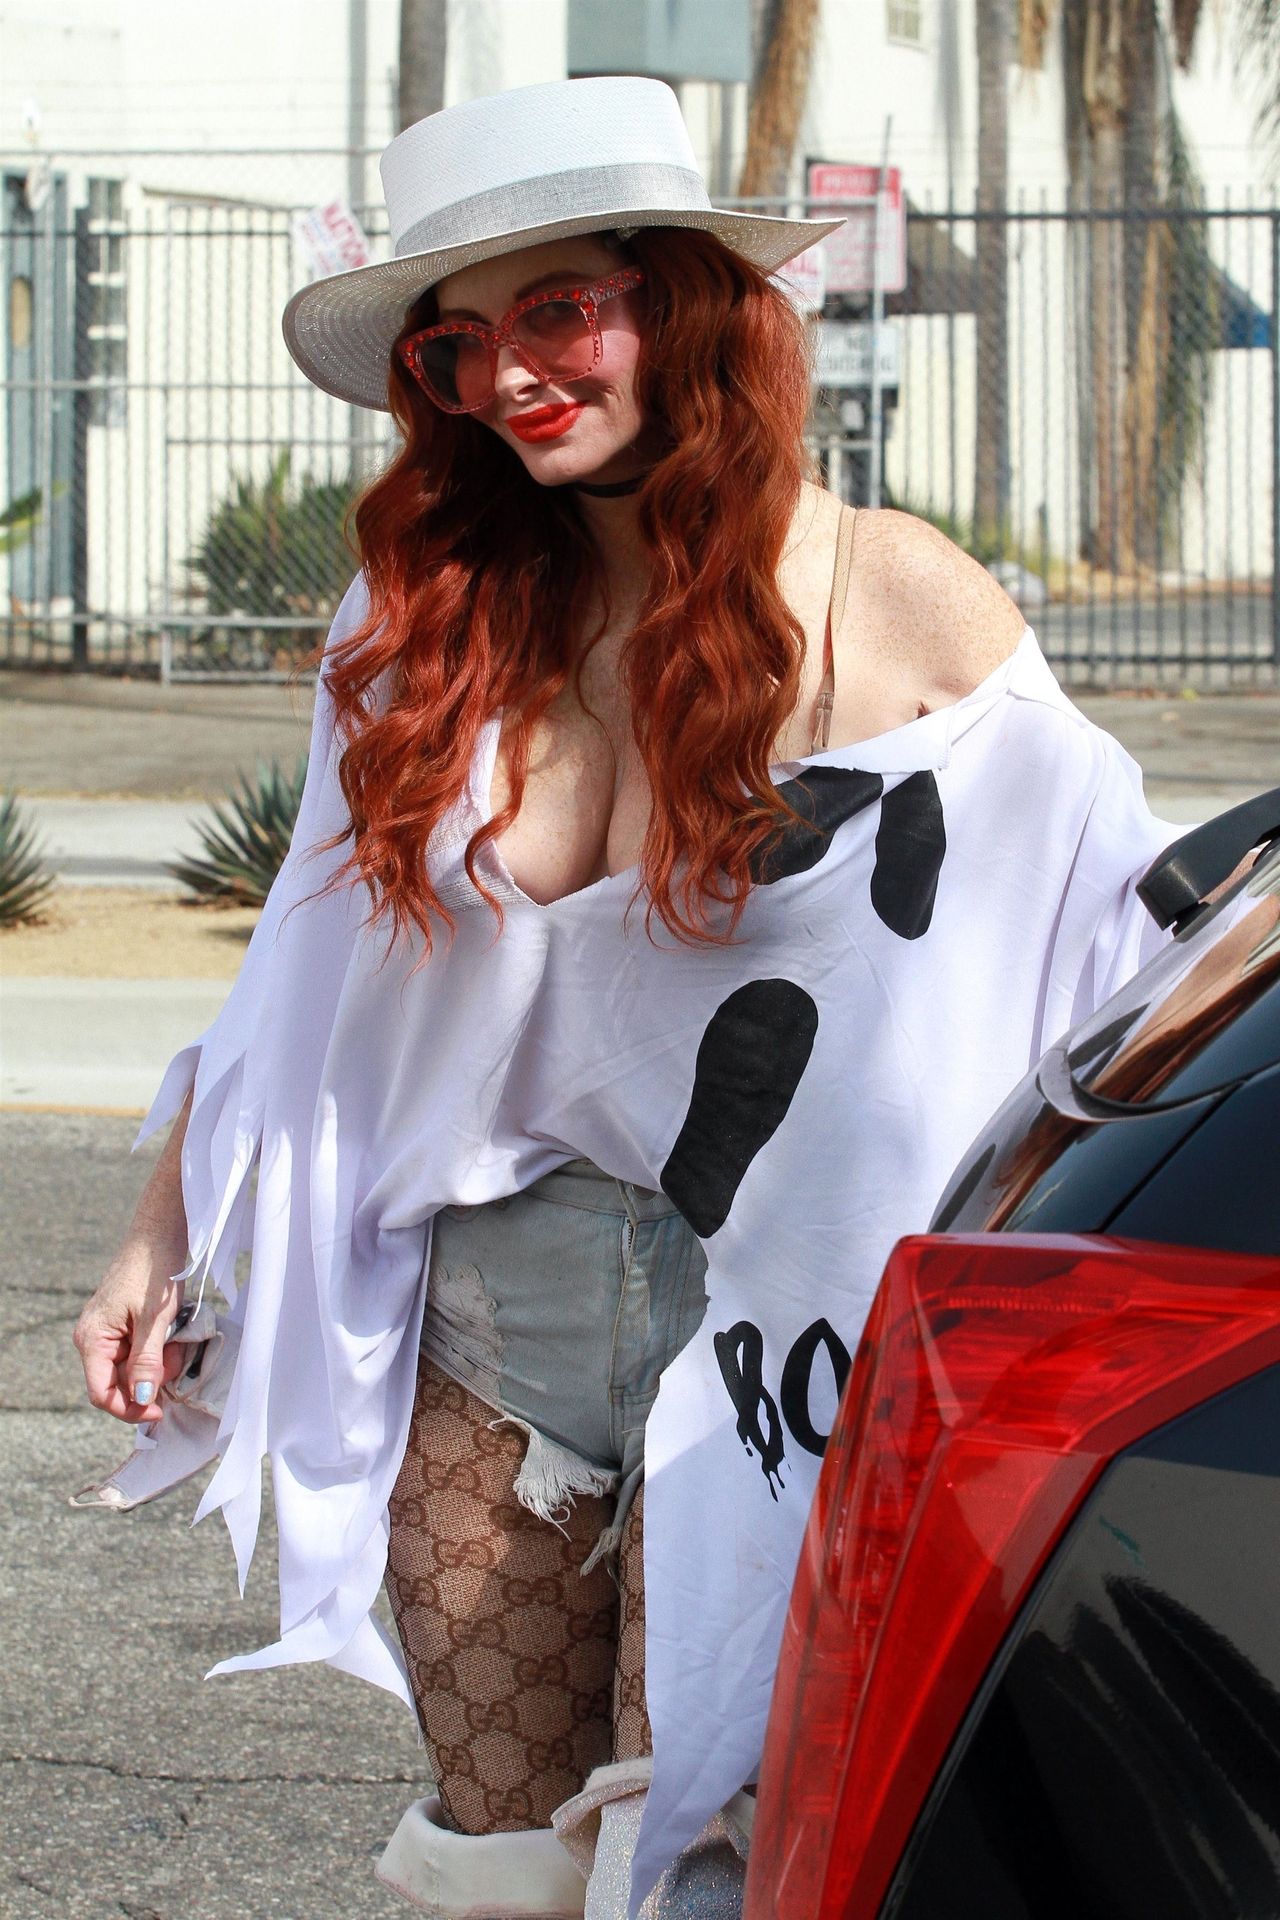 Phoebe Price is Seen in the Halloween Spirit (25 Photos)